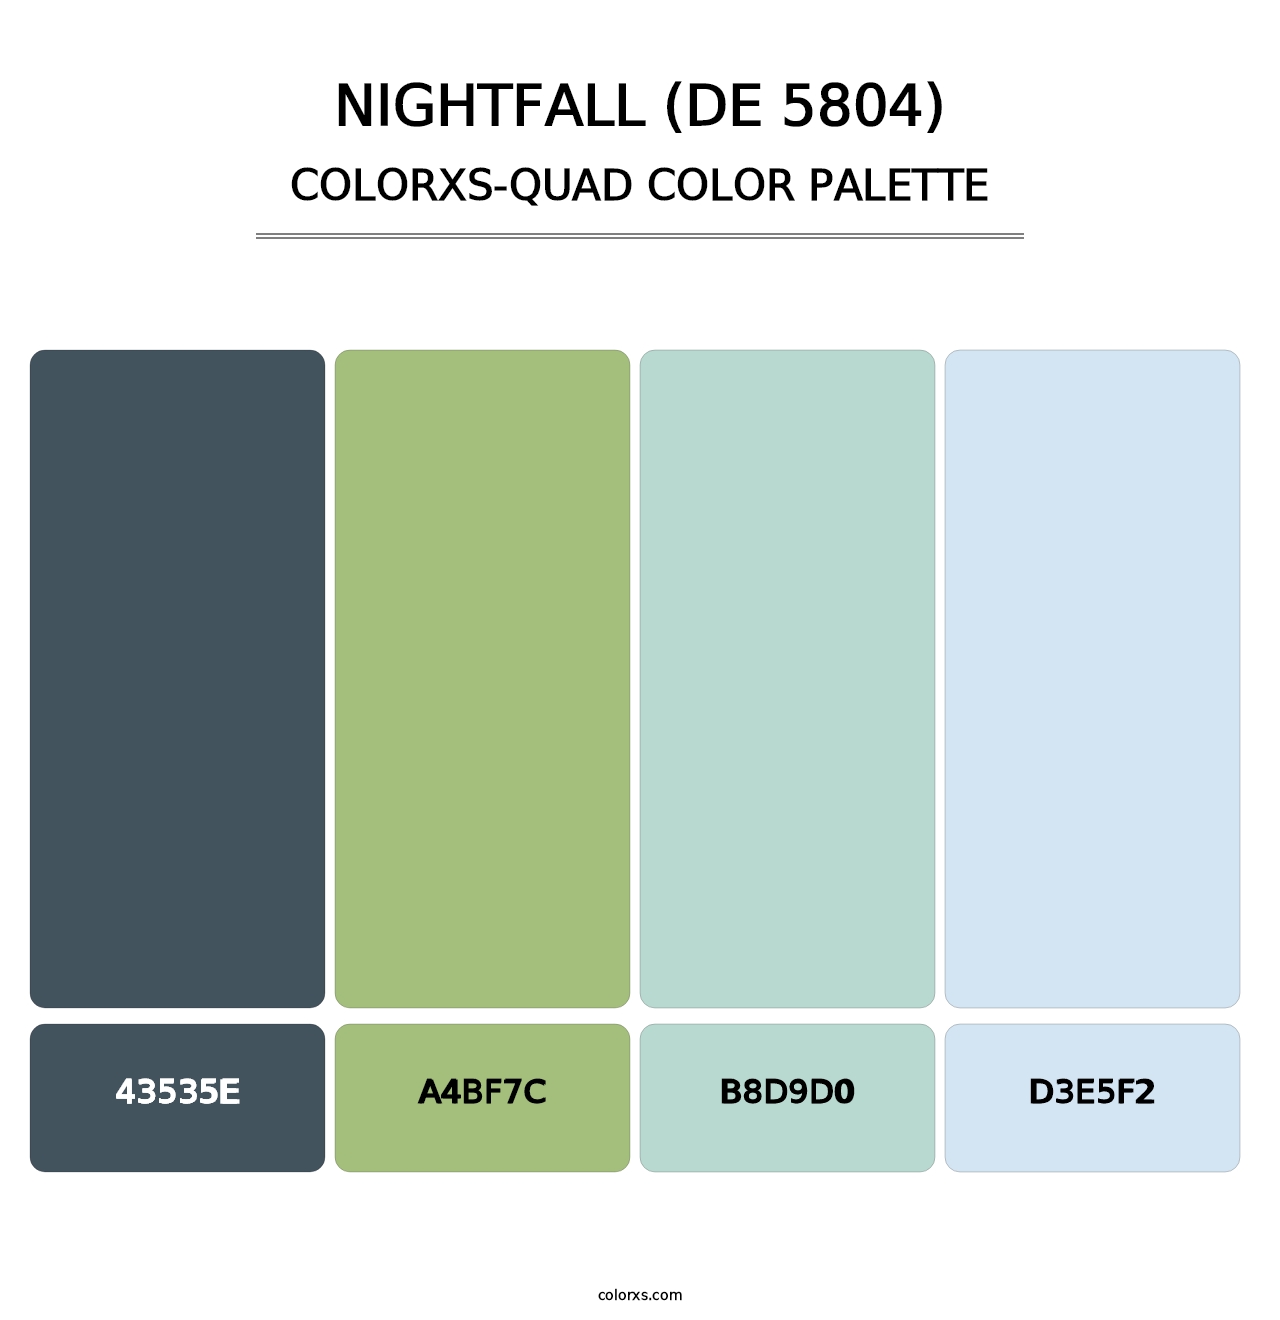 Nightfall (DE 5804) - Colorxs Quad Palette